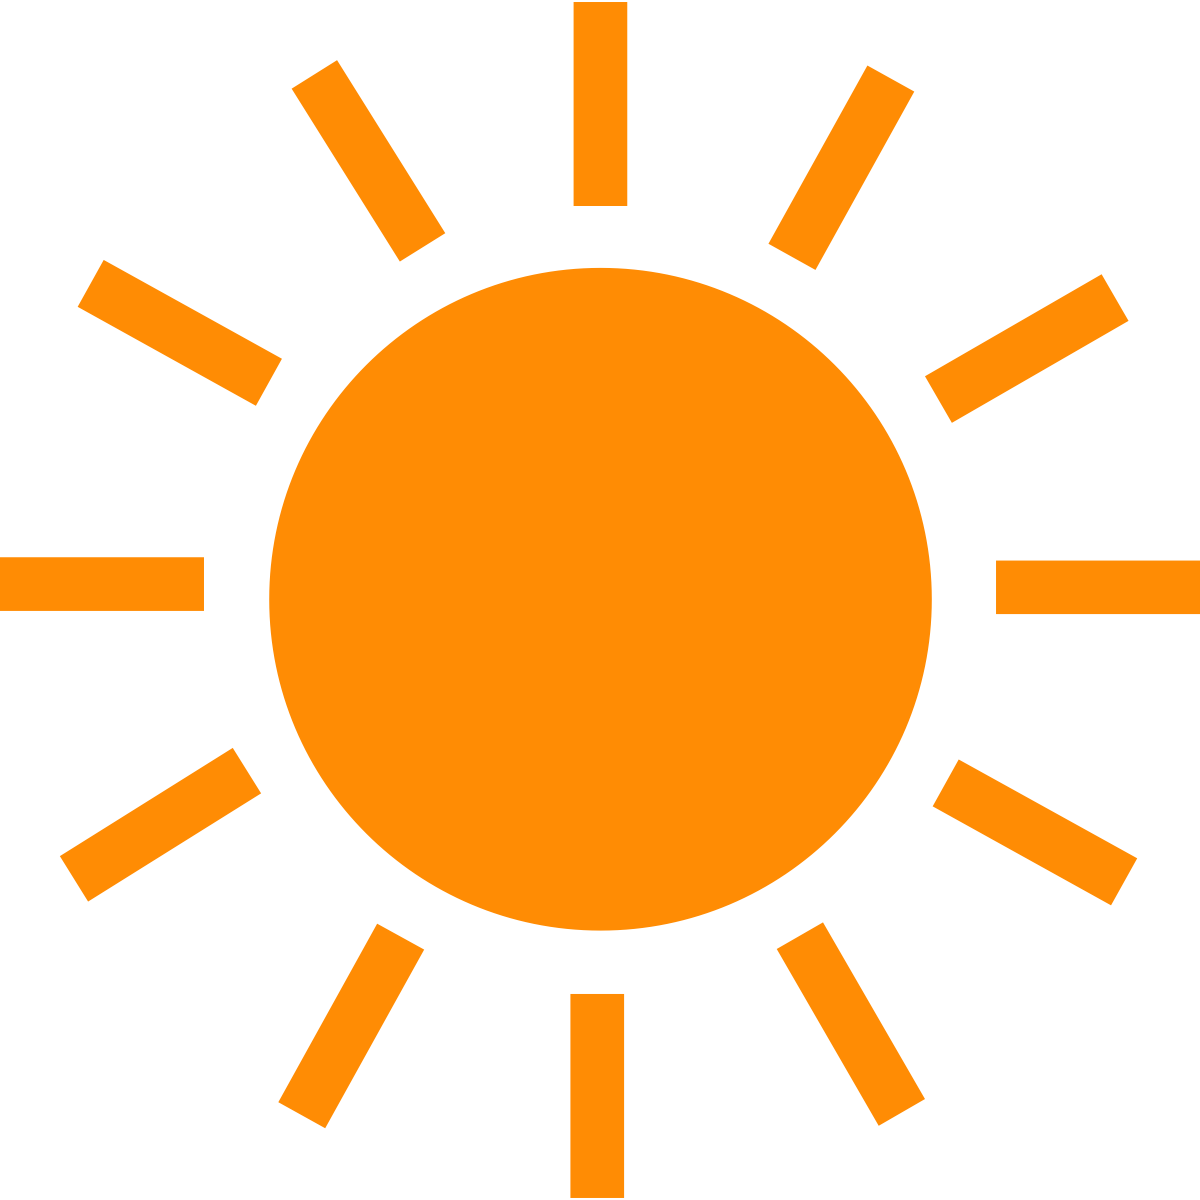 <p>УФ излучение солнца (солнечная радиация) и нагревание</p>